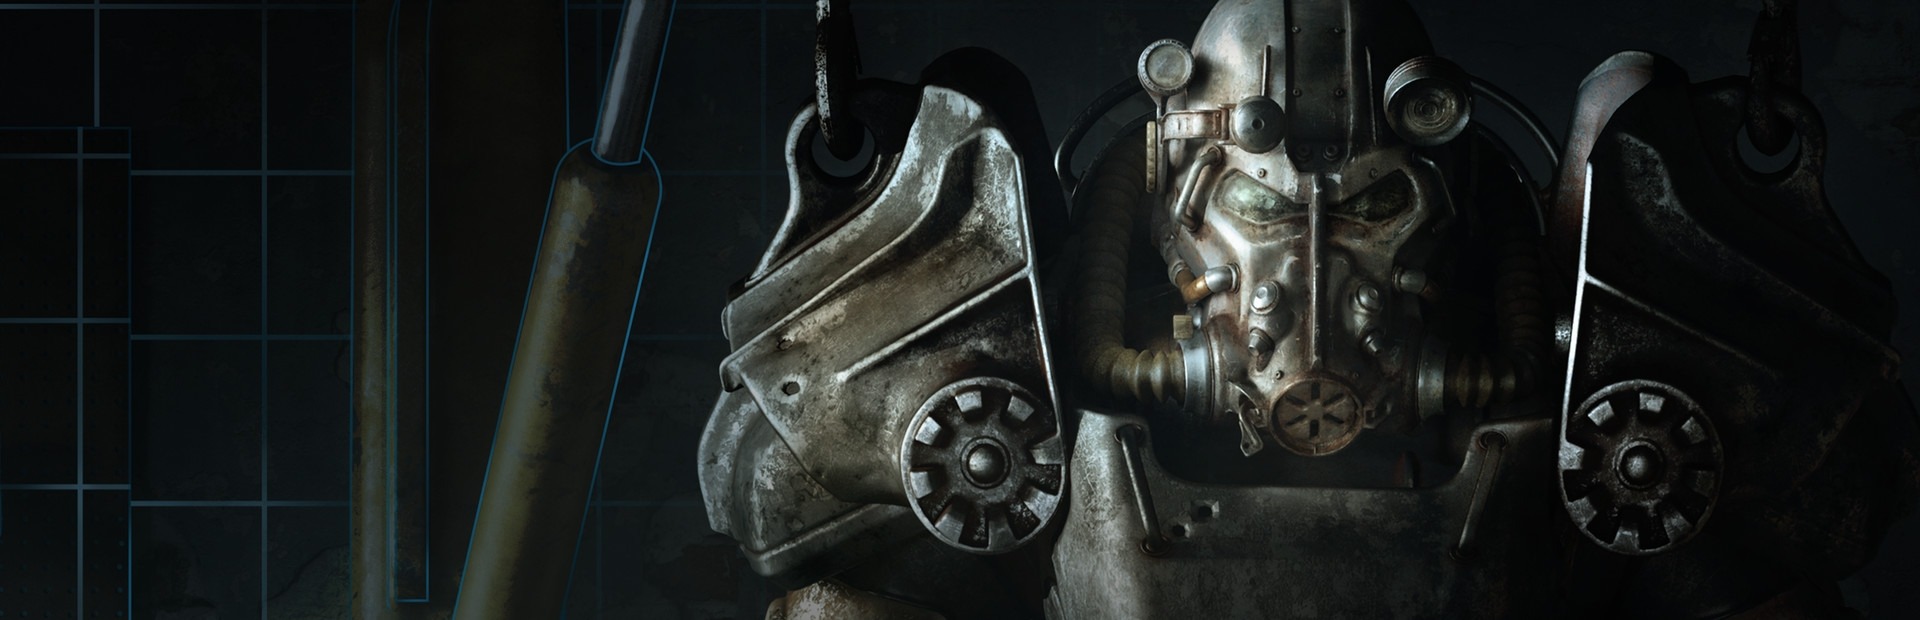 Fallout 4 vr системные требования фото 25